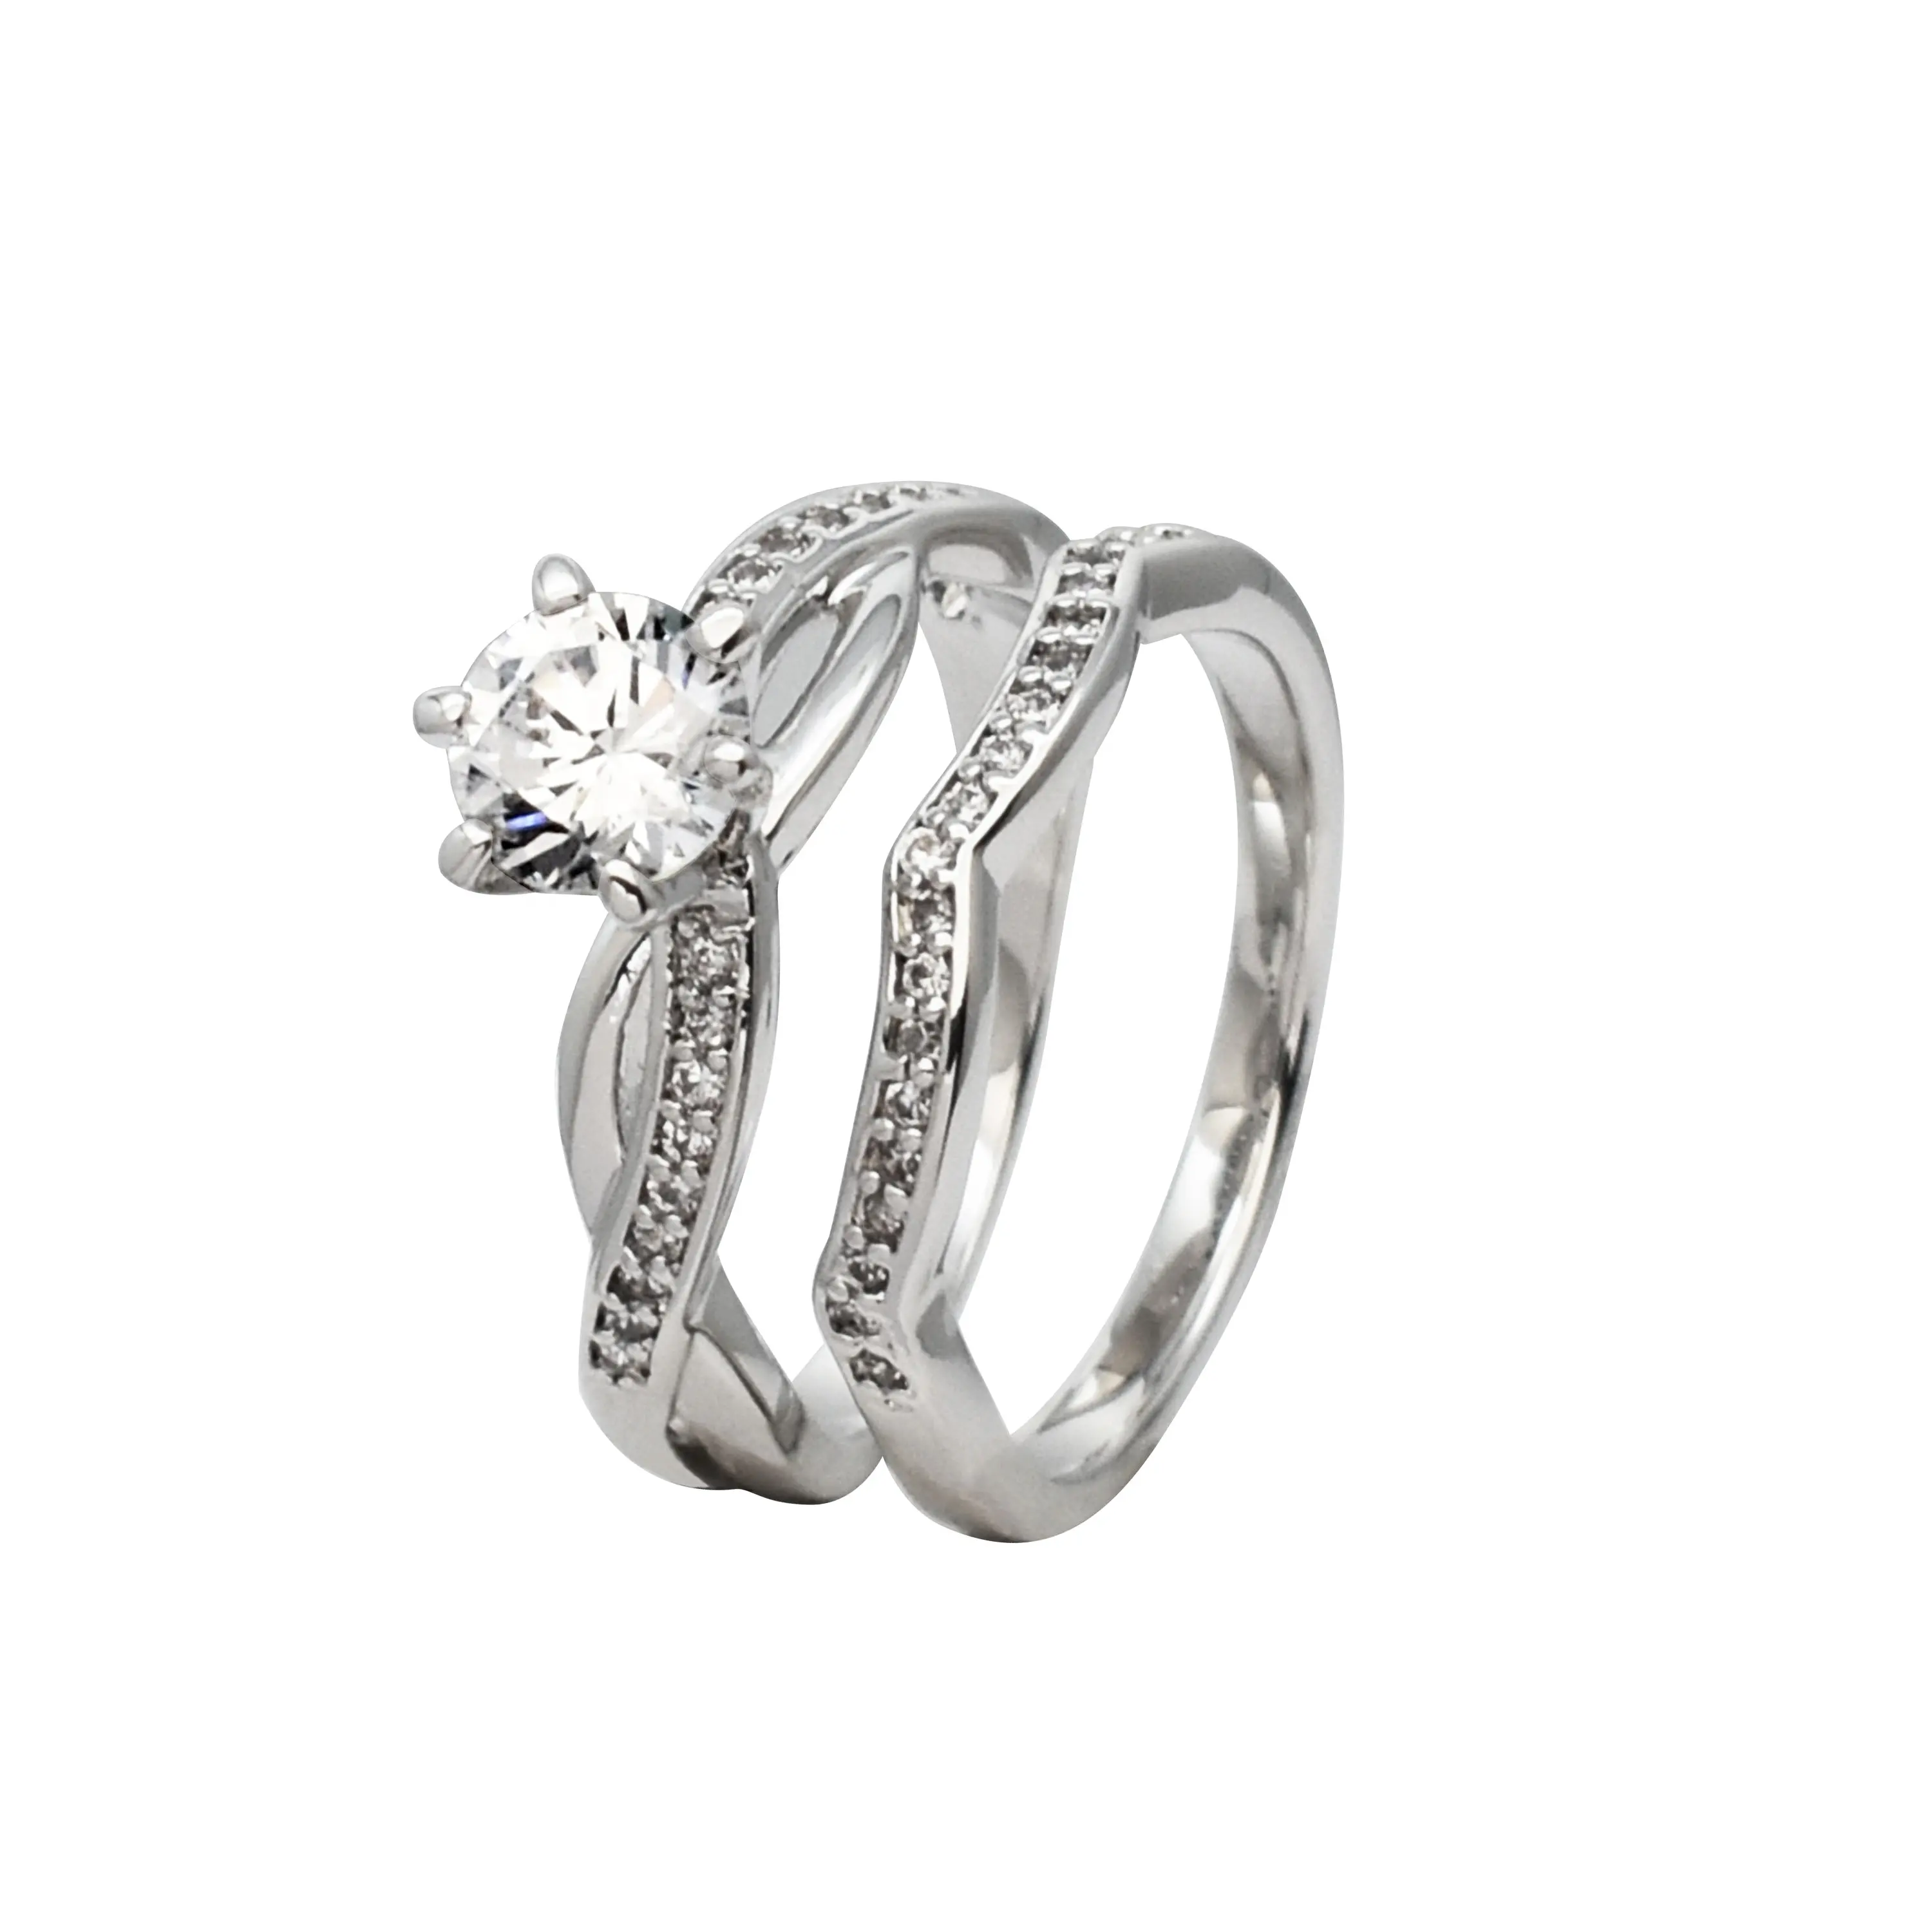 Designer Solitaire Trouwring Sterling 925 Zilver Twist Schacht Zes Prong Instellen Cubic Diamond Sterns Bridal Wedding Ring Set